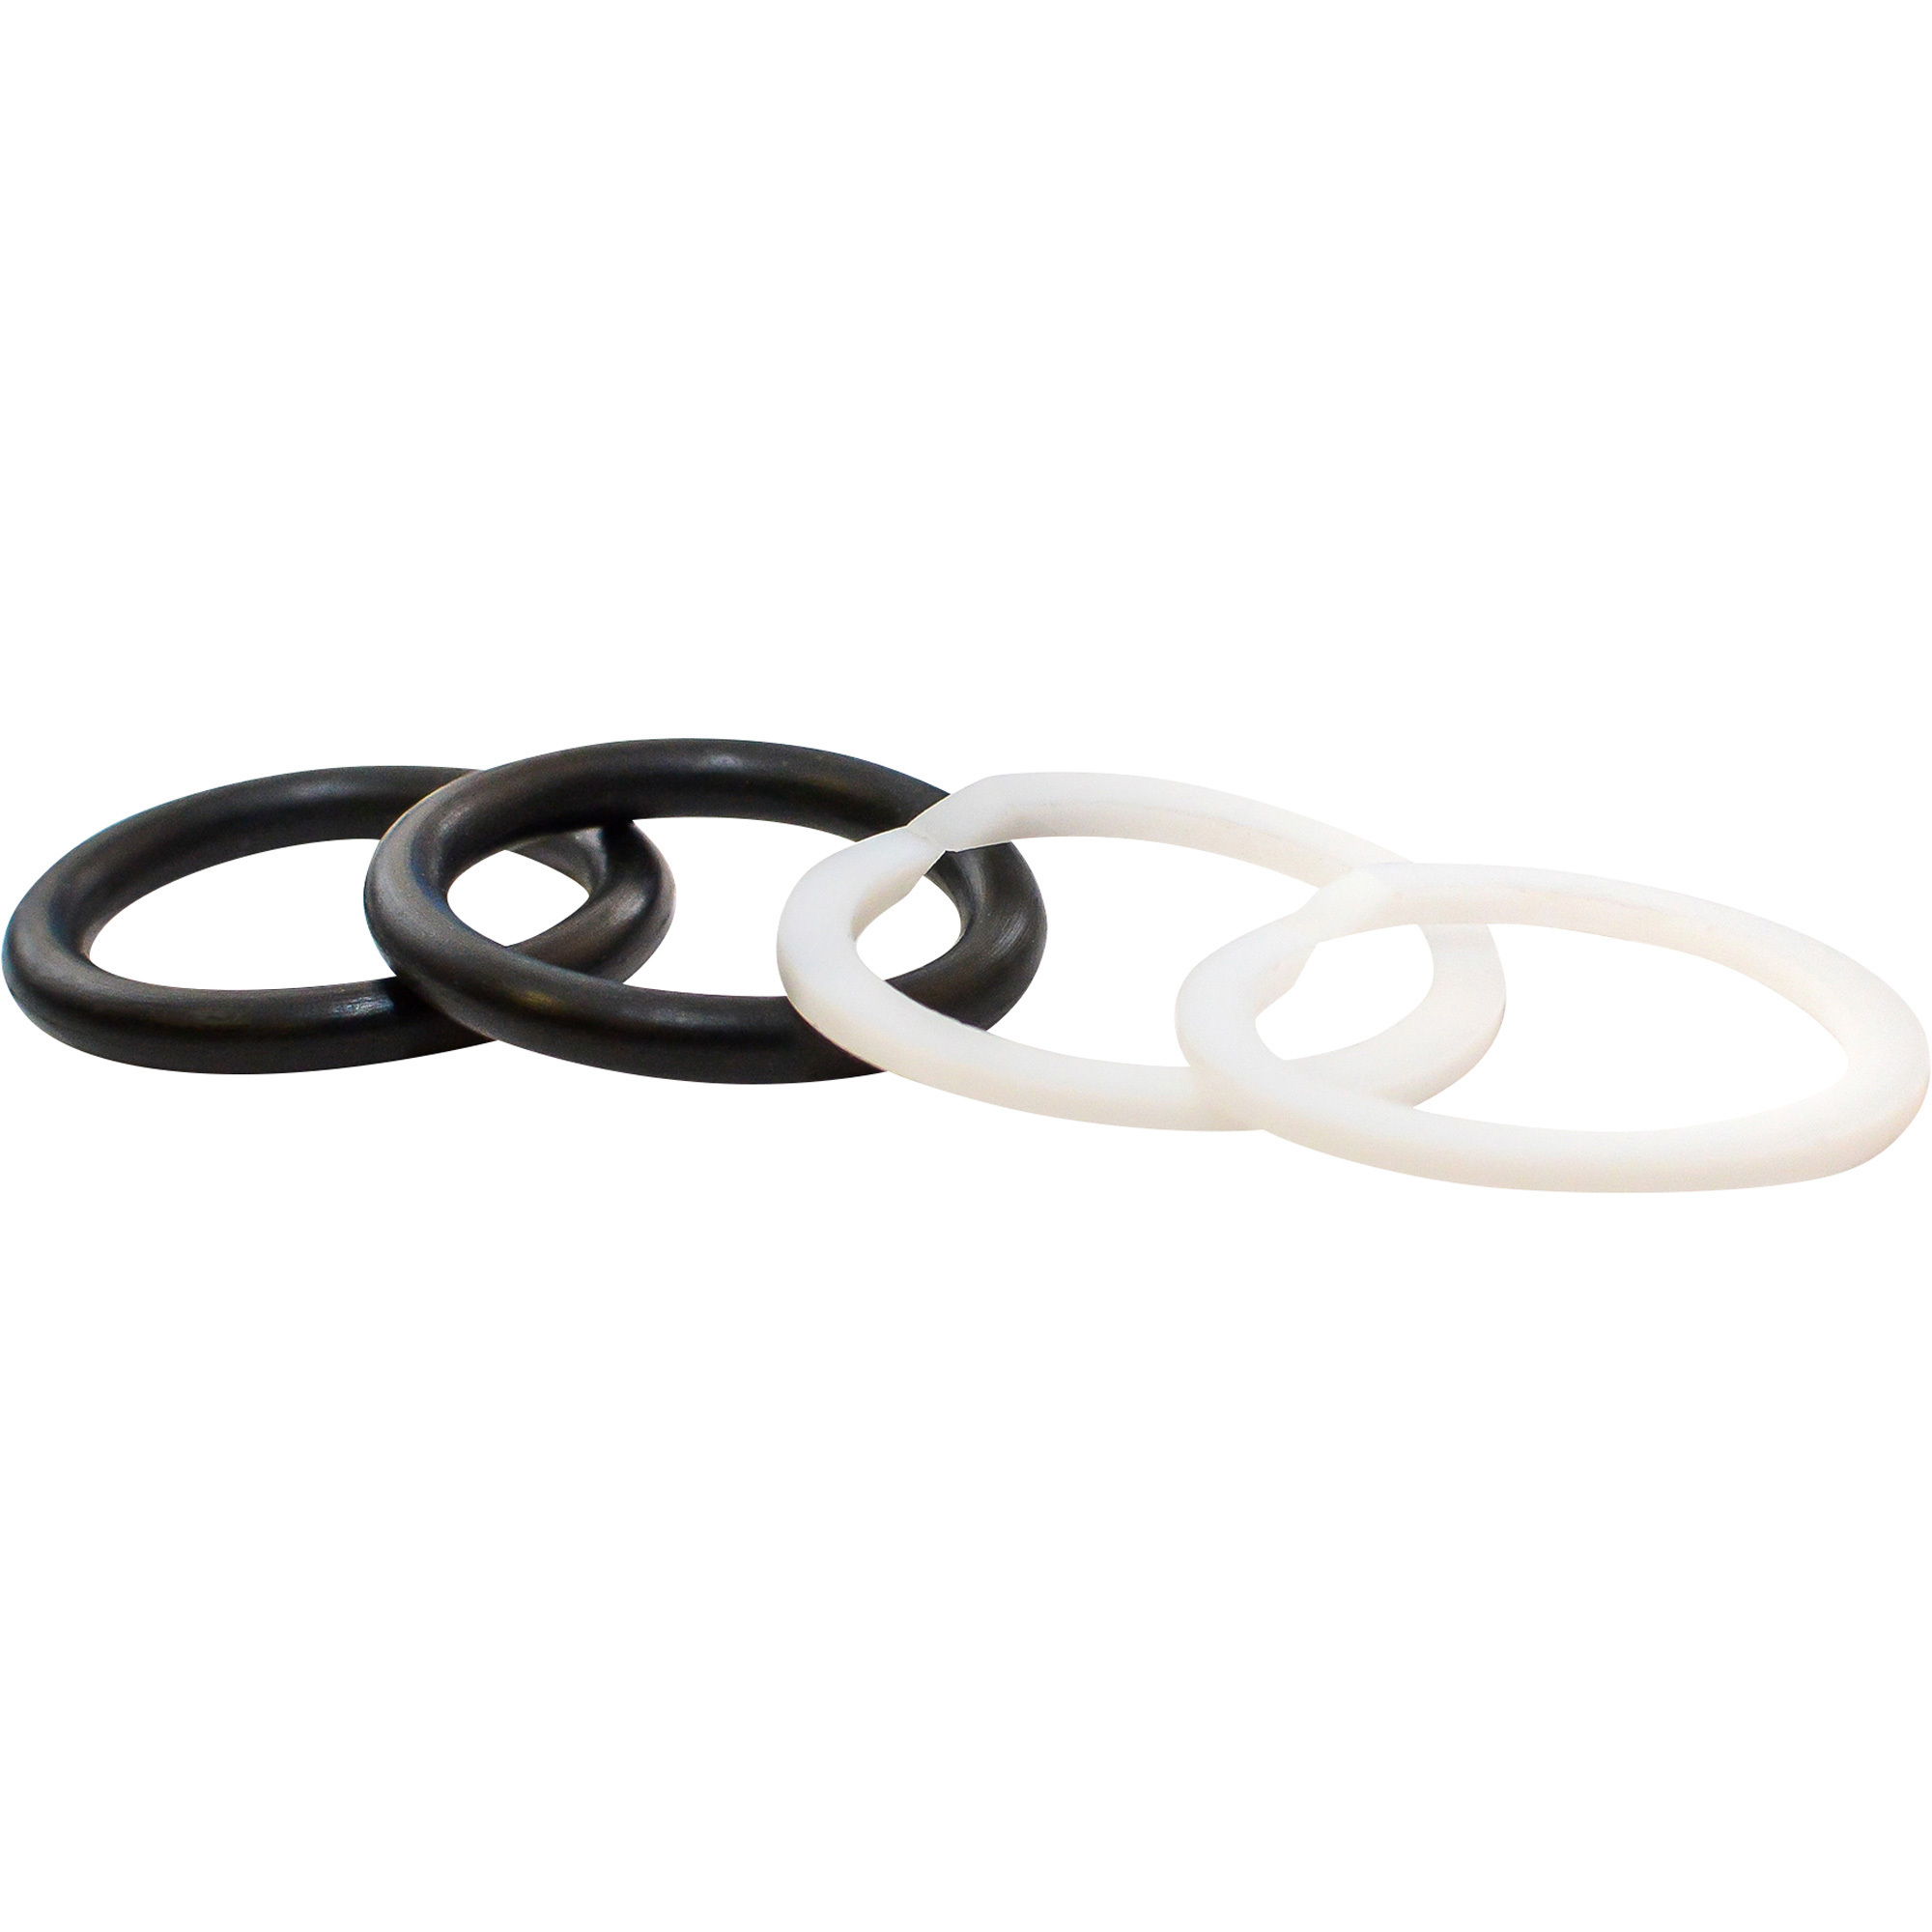 Replacement Swivel Seal Kit For 426 Model Swivels — 3/4Inch Viton O-Rings, Model - Coxreels 426-1-SEALKIT